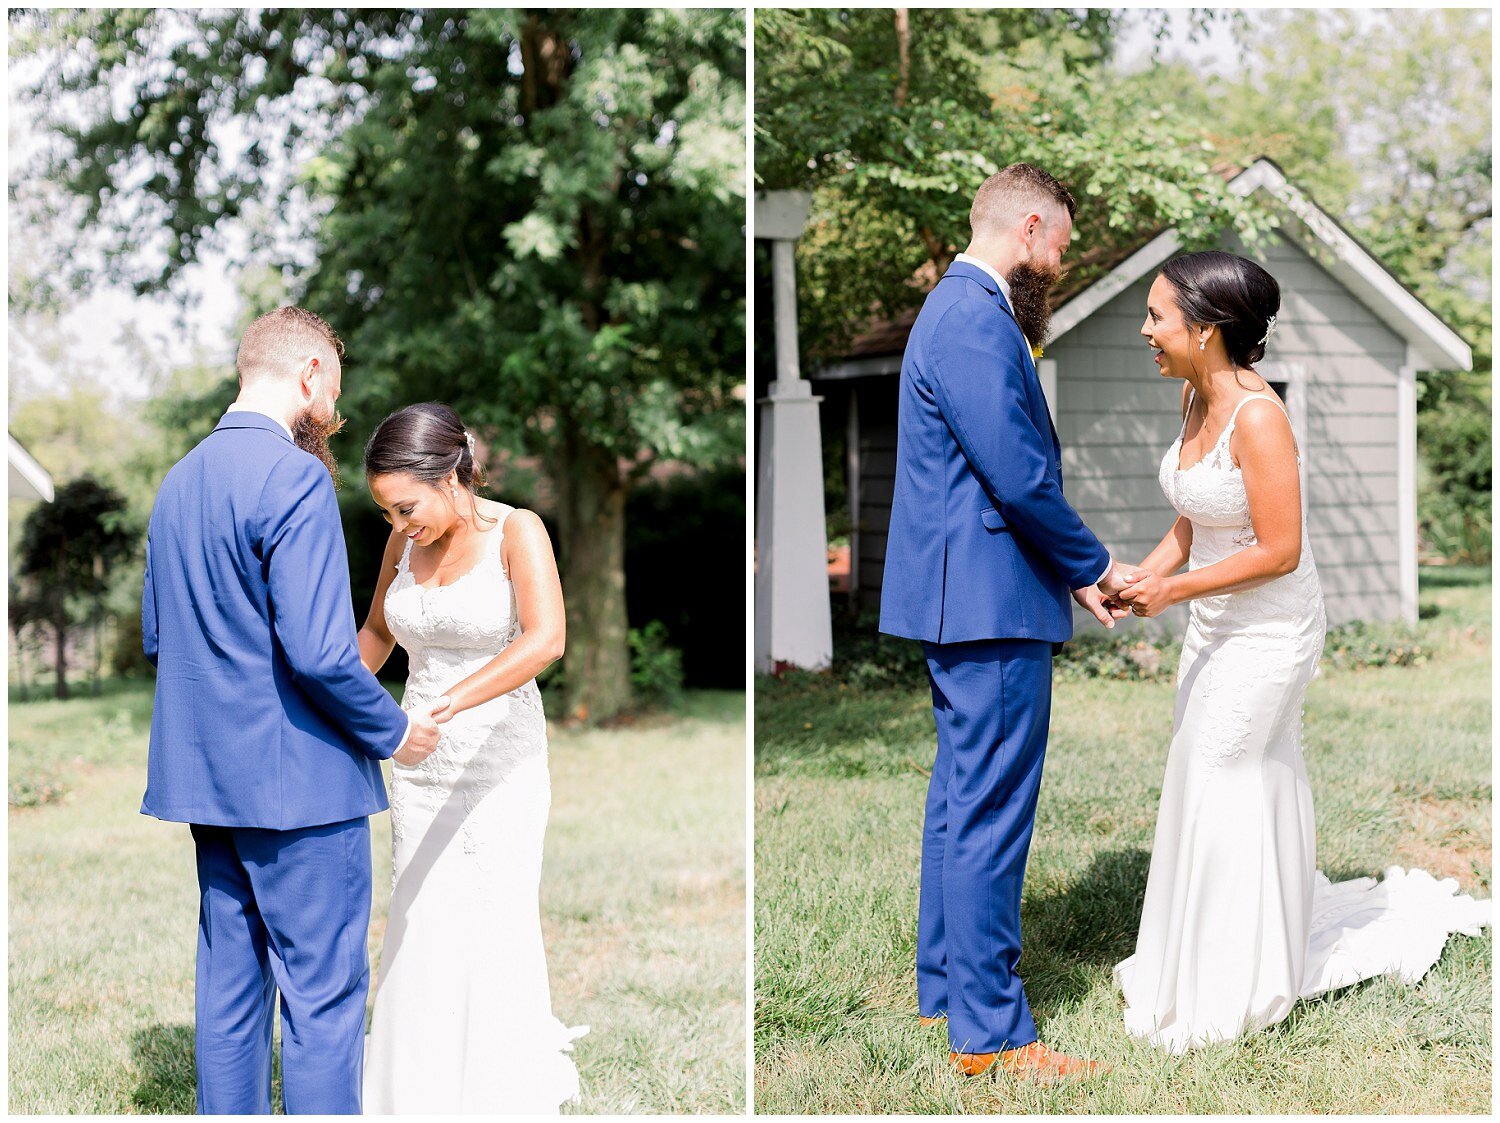 Yellow-and-Navy-Summer-Outdoor-Wedding-The-Legacy-Kansas-City-B+C-08-2020-Elizabeth-Ladean-Photography-photo-_5468.jpg